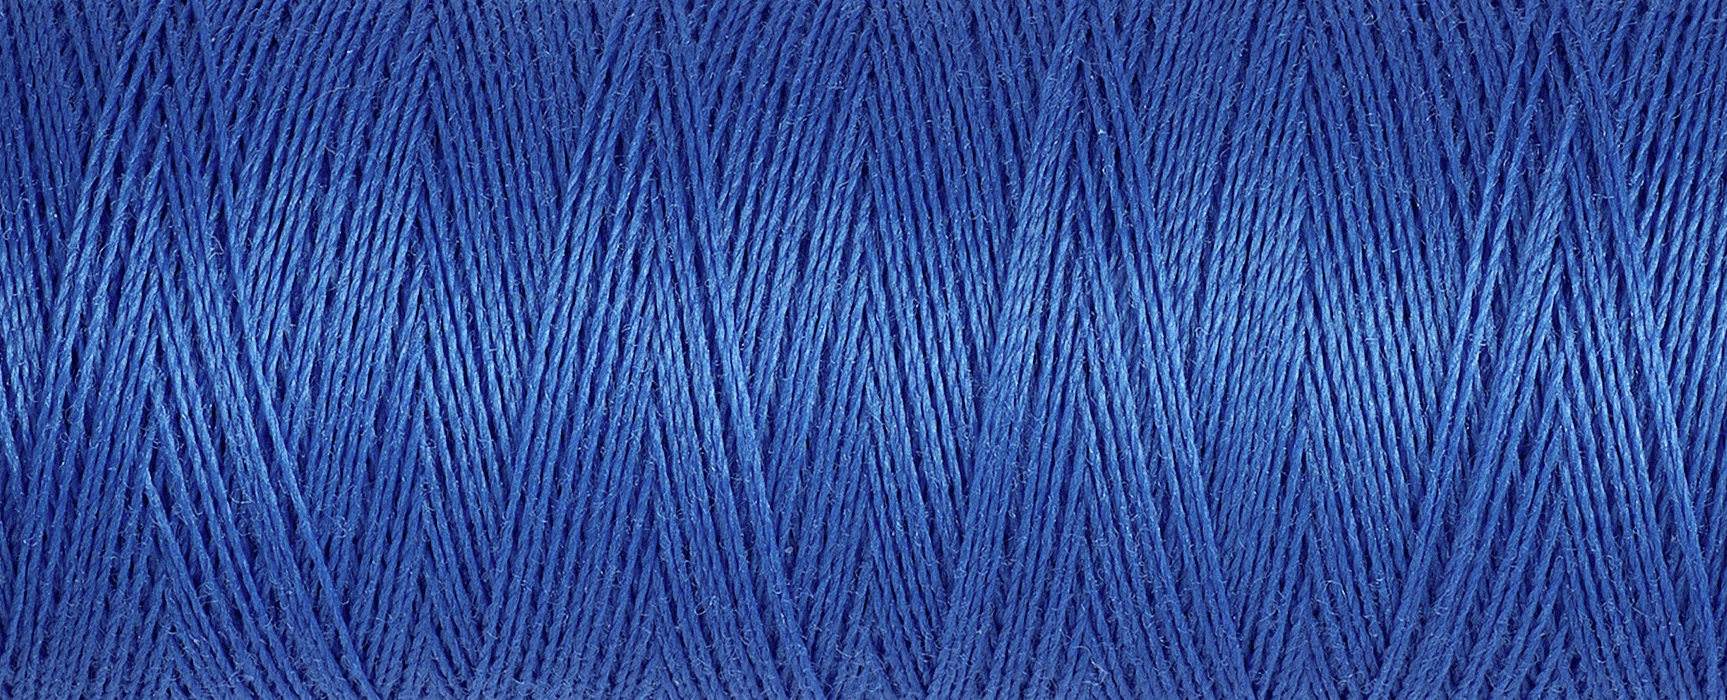 Gutermann Sew-All Thread - 100M (959)-Thread-Jelly Fabrics